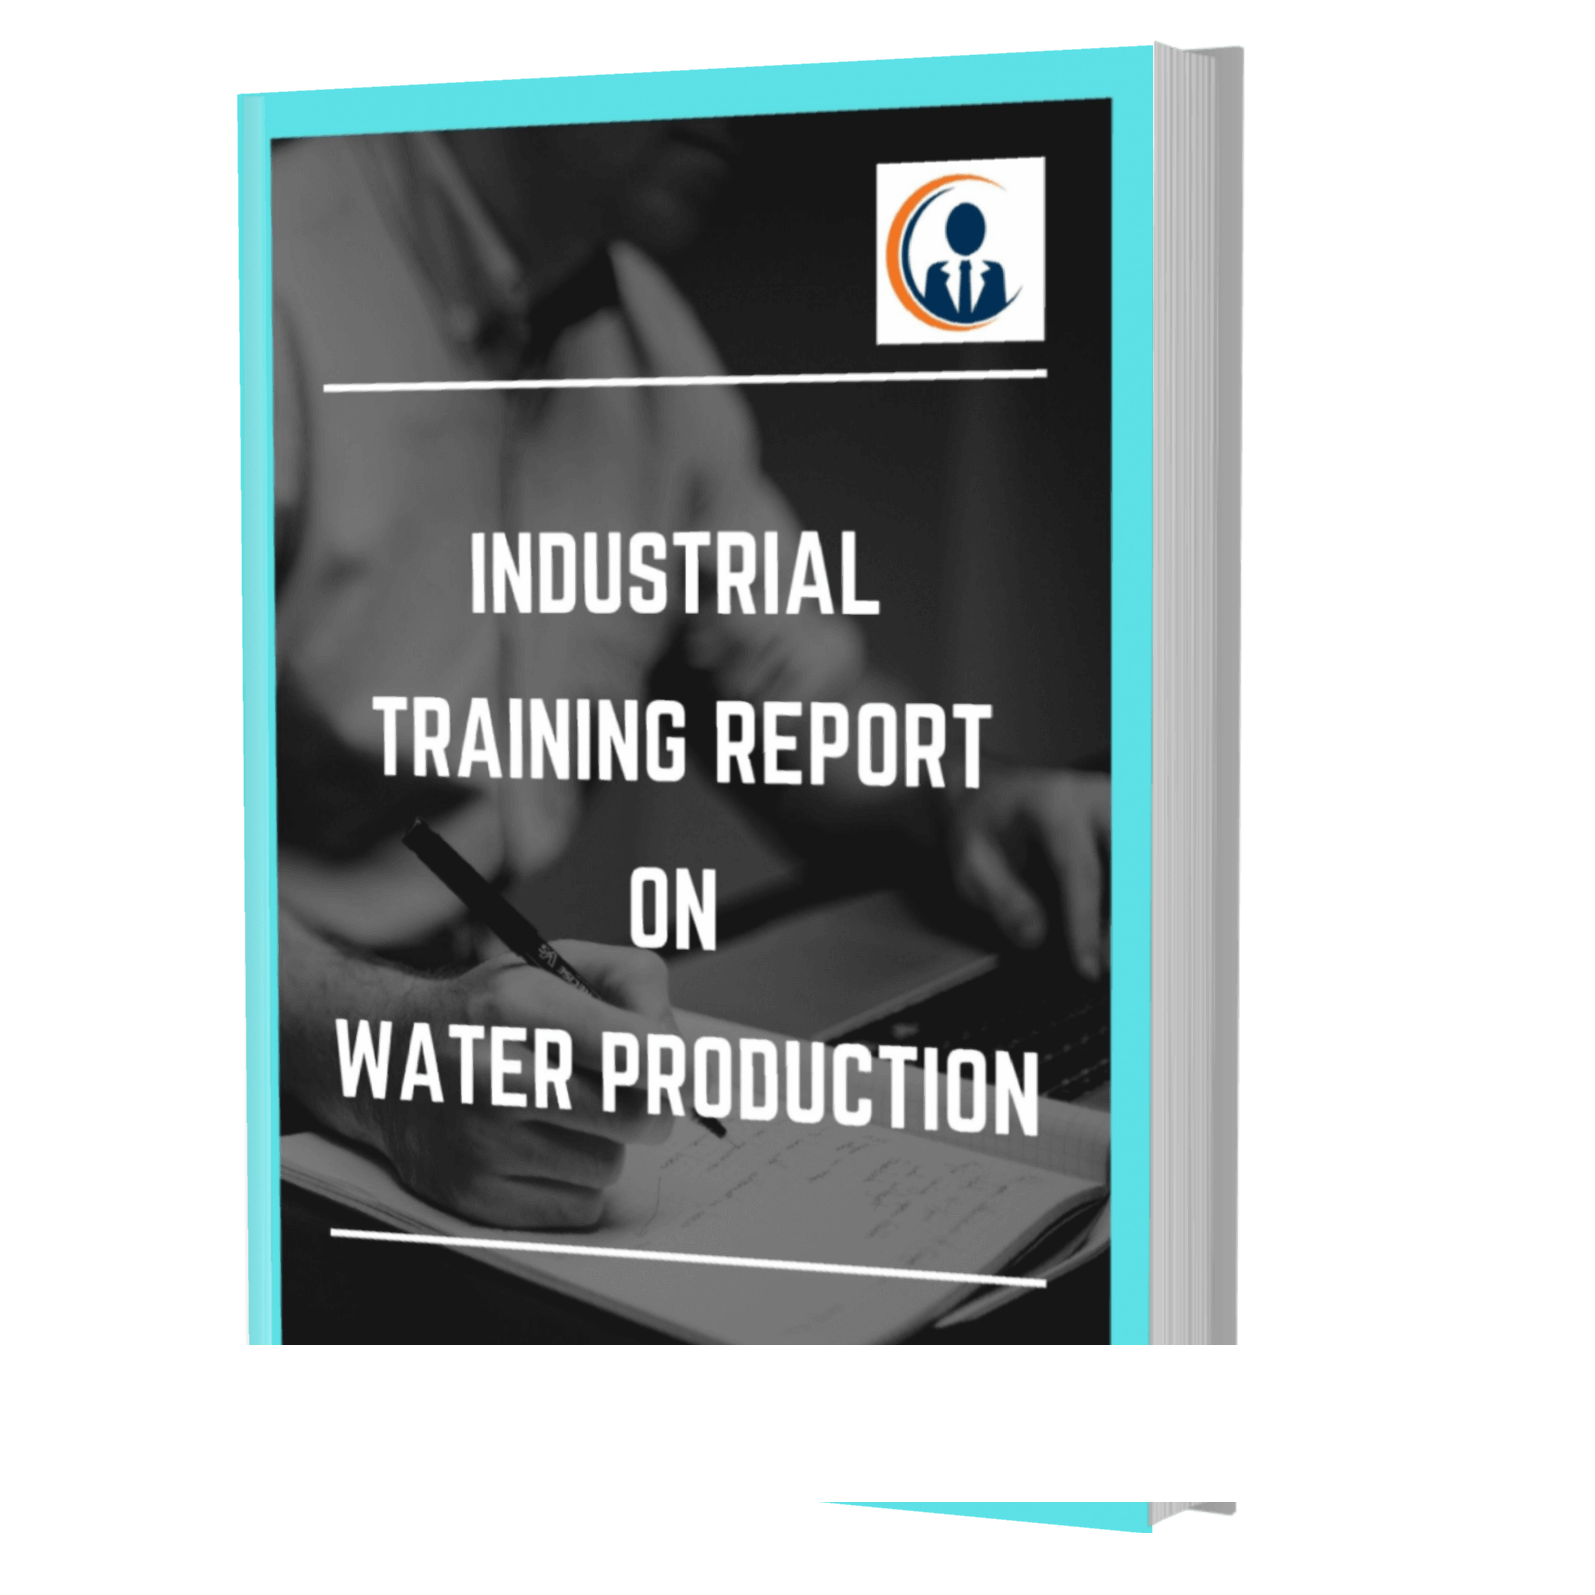 sachet water production business plan pdf